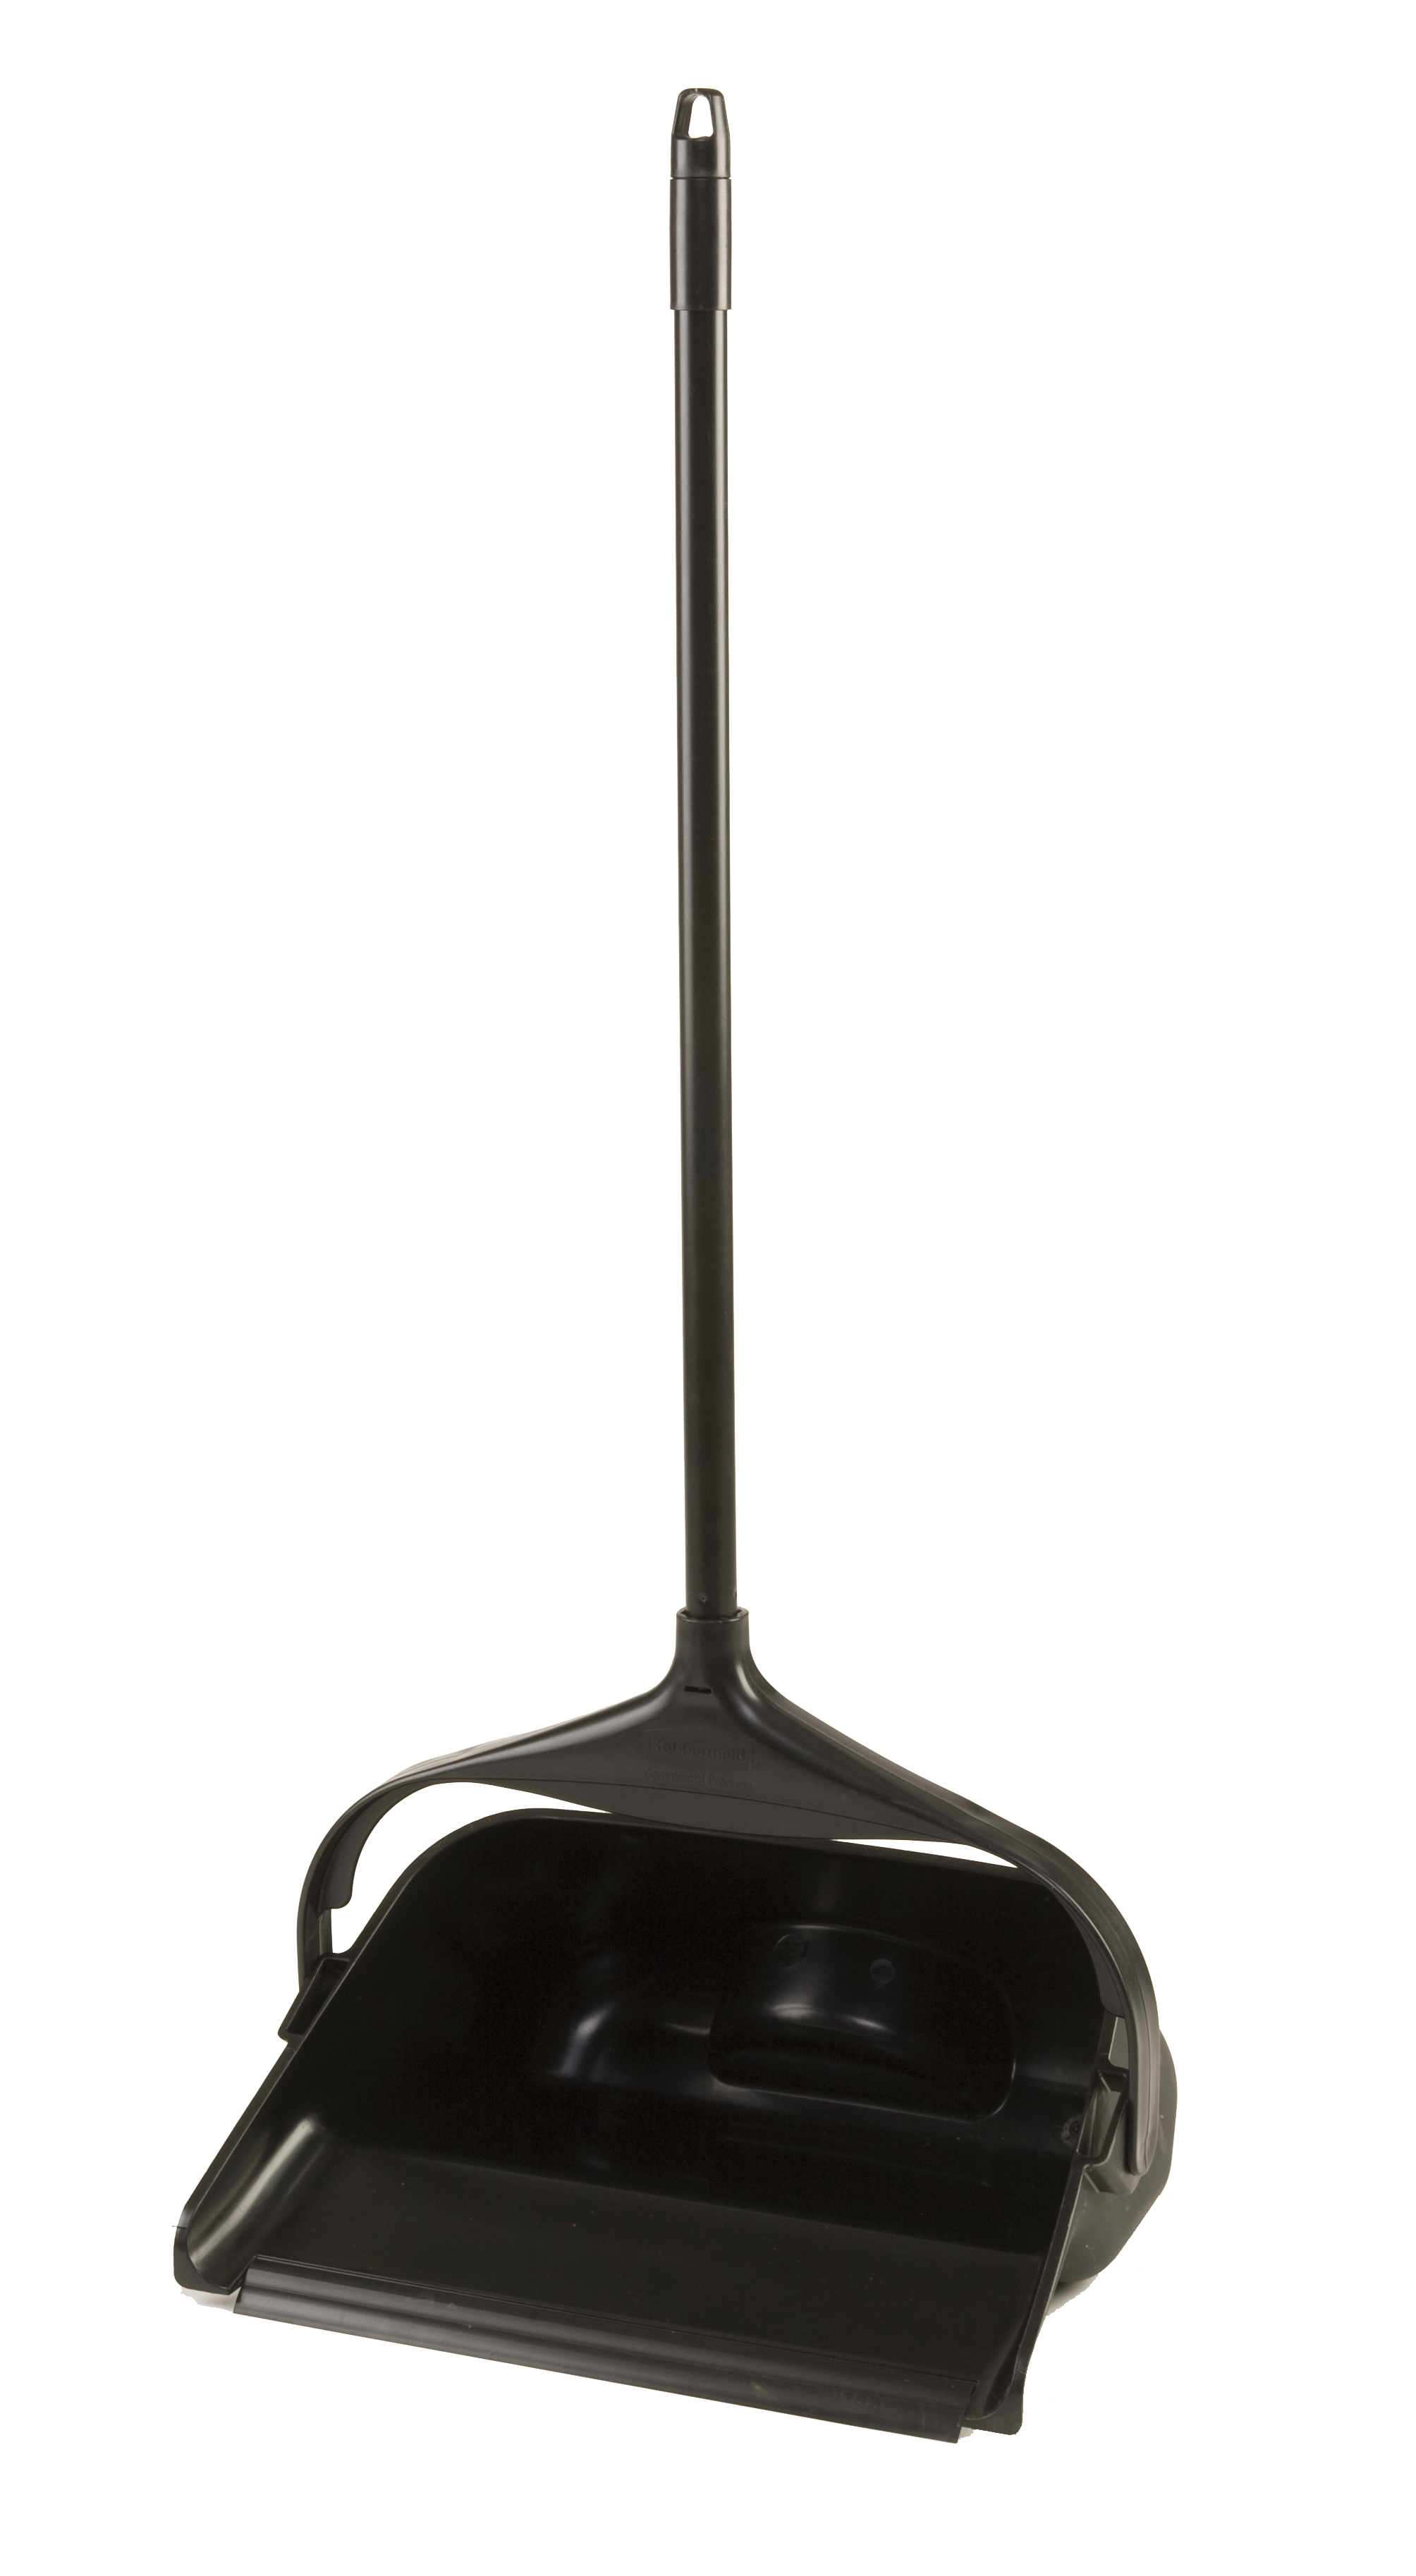 Rubbermaid Fg253100bla Lobby Pro Black Upright Dustpan for sale online 